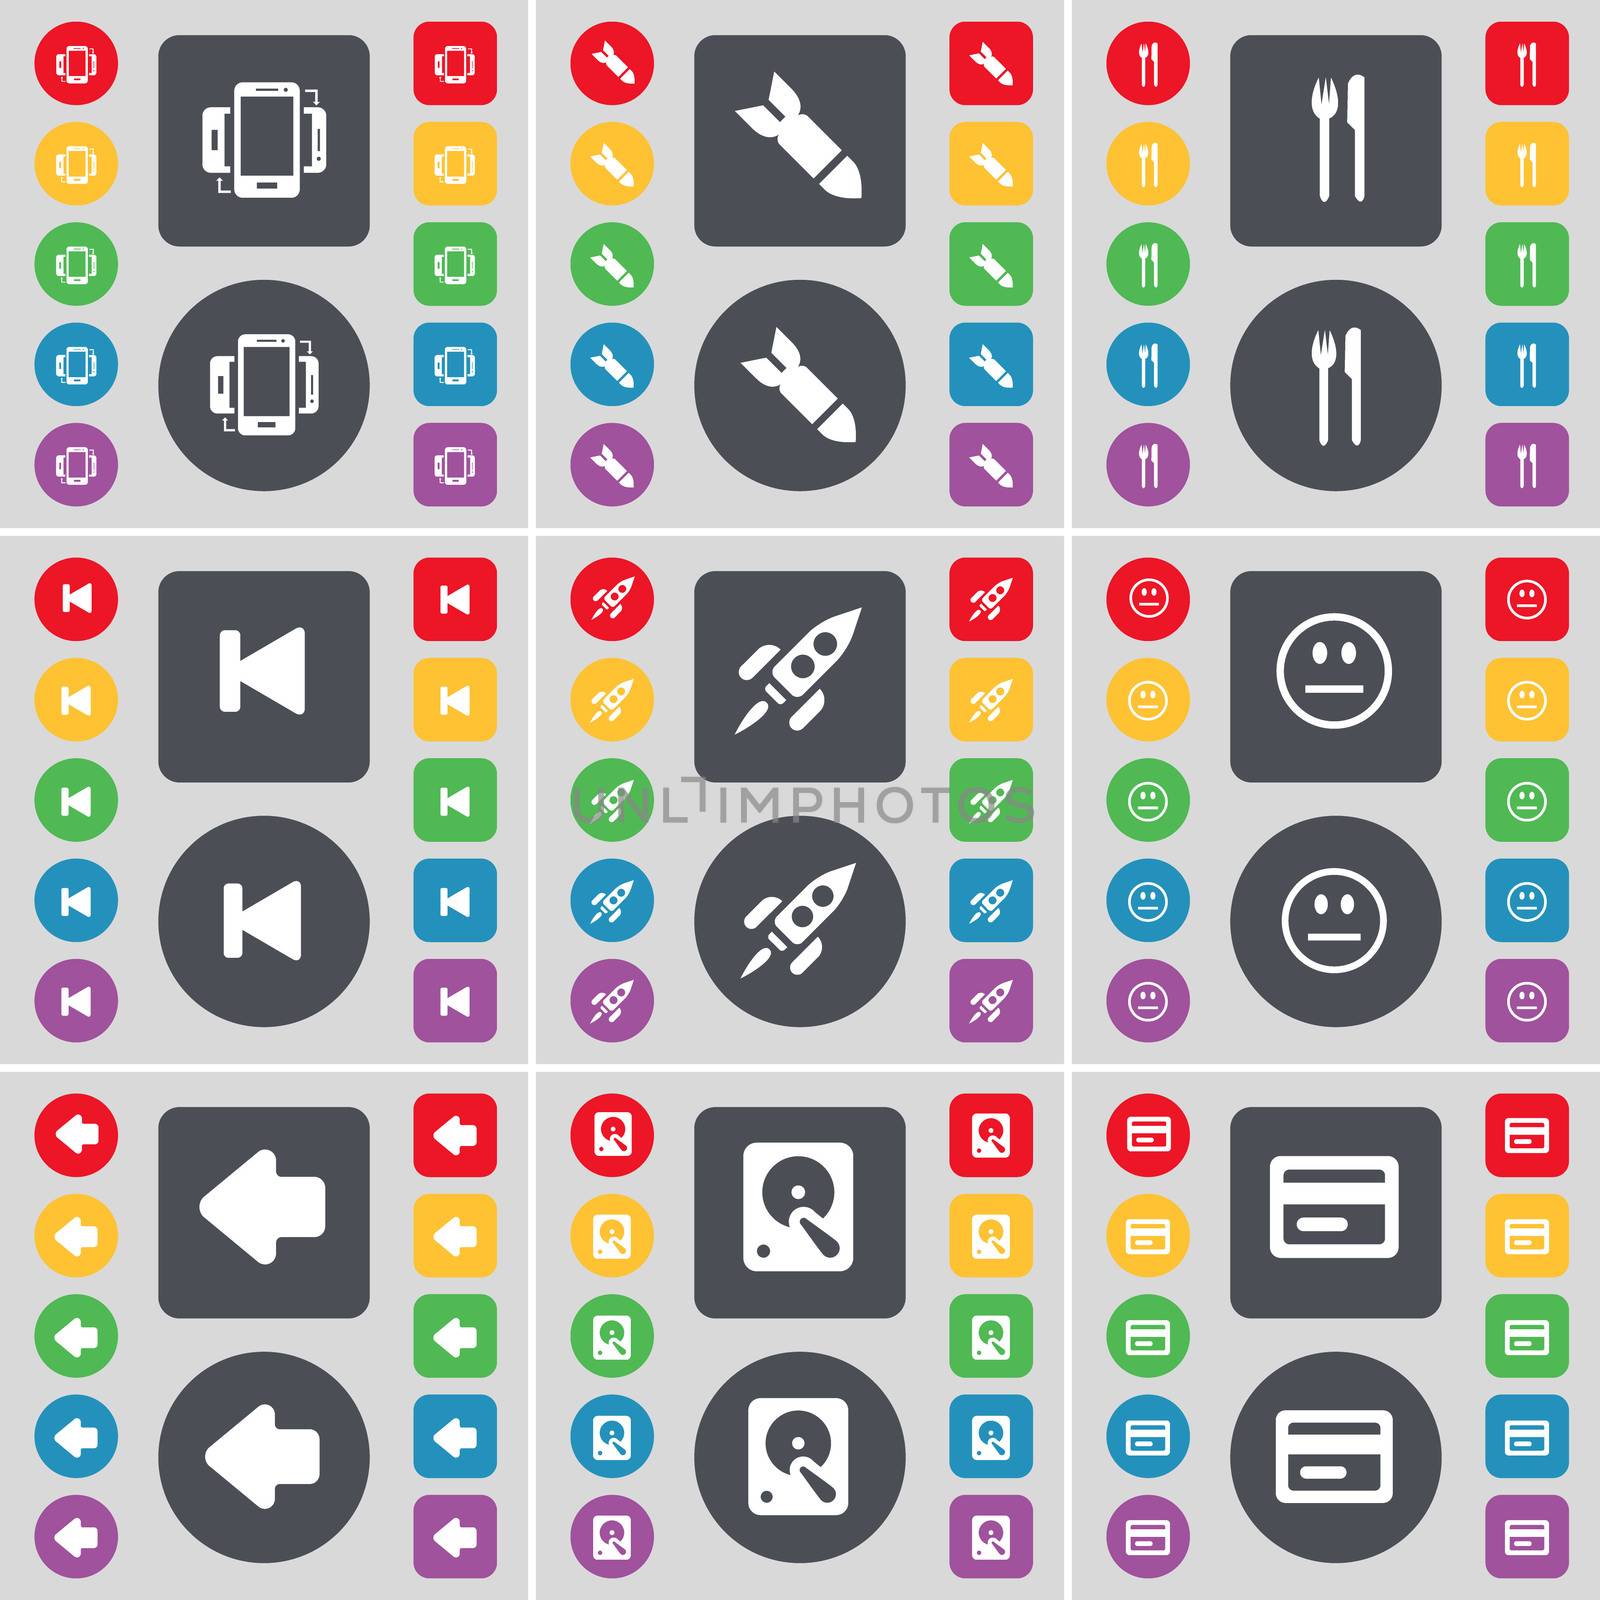 Smartphone, Rocket, Fork and knife, Media skip, Smile, Arrow left, Hard drive, Credit card icon symbol. A large set of flat, colored buttons for your design.  by serhii_lohvyniuk